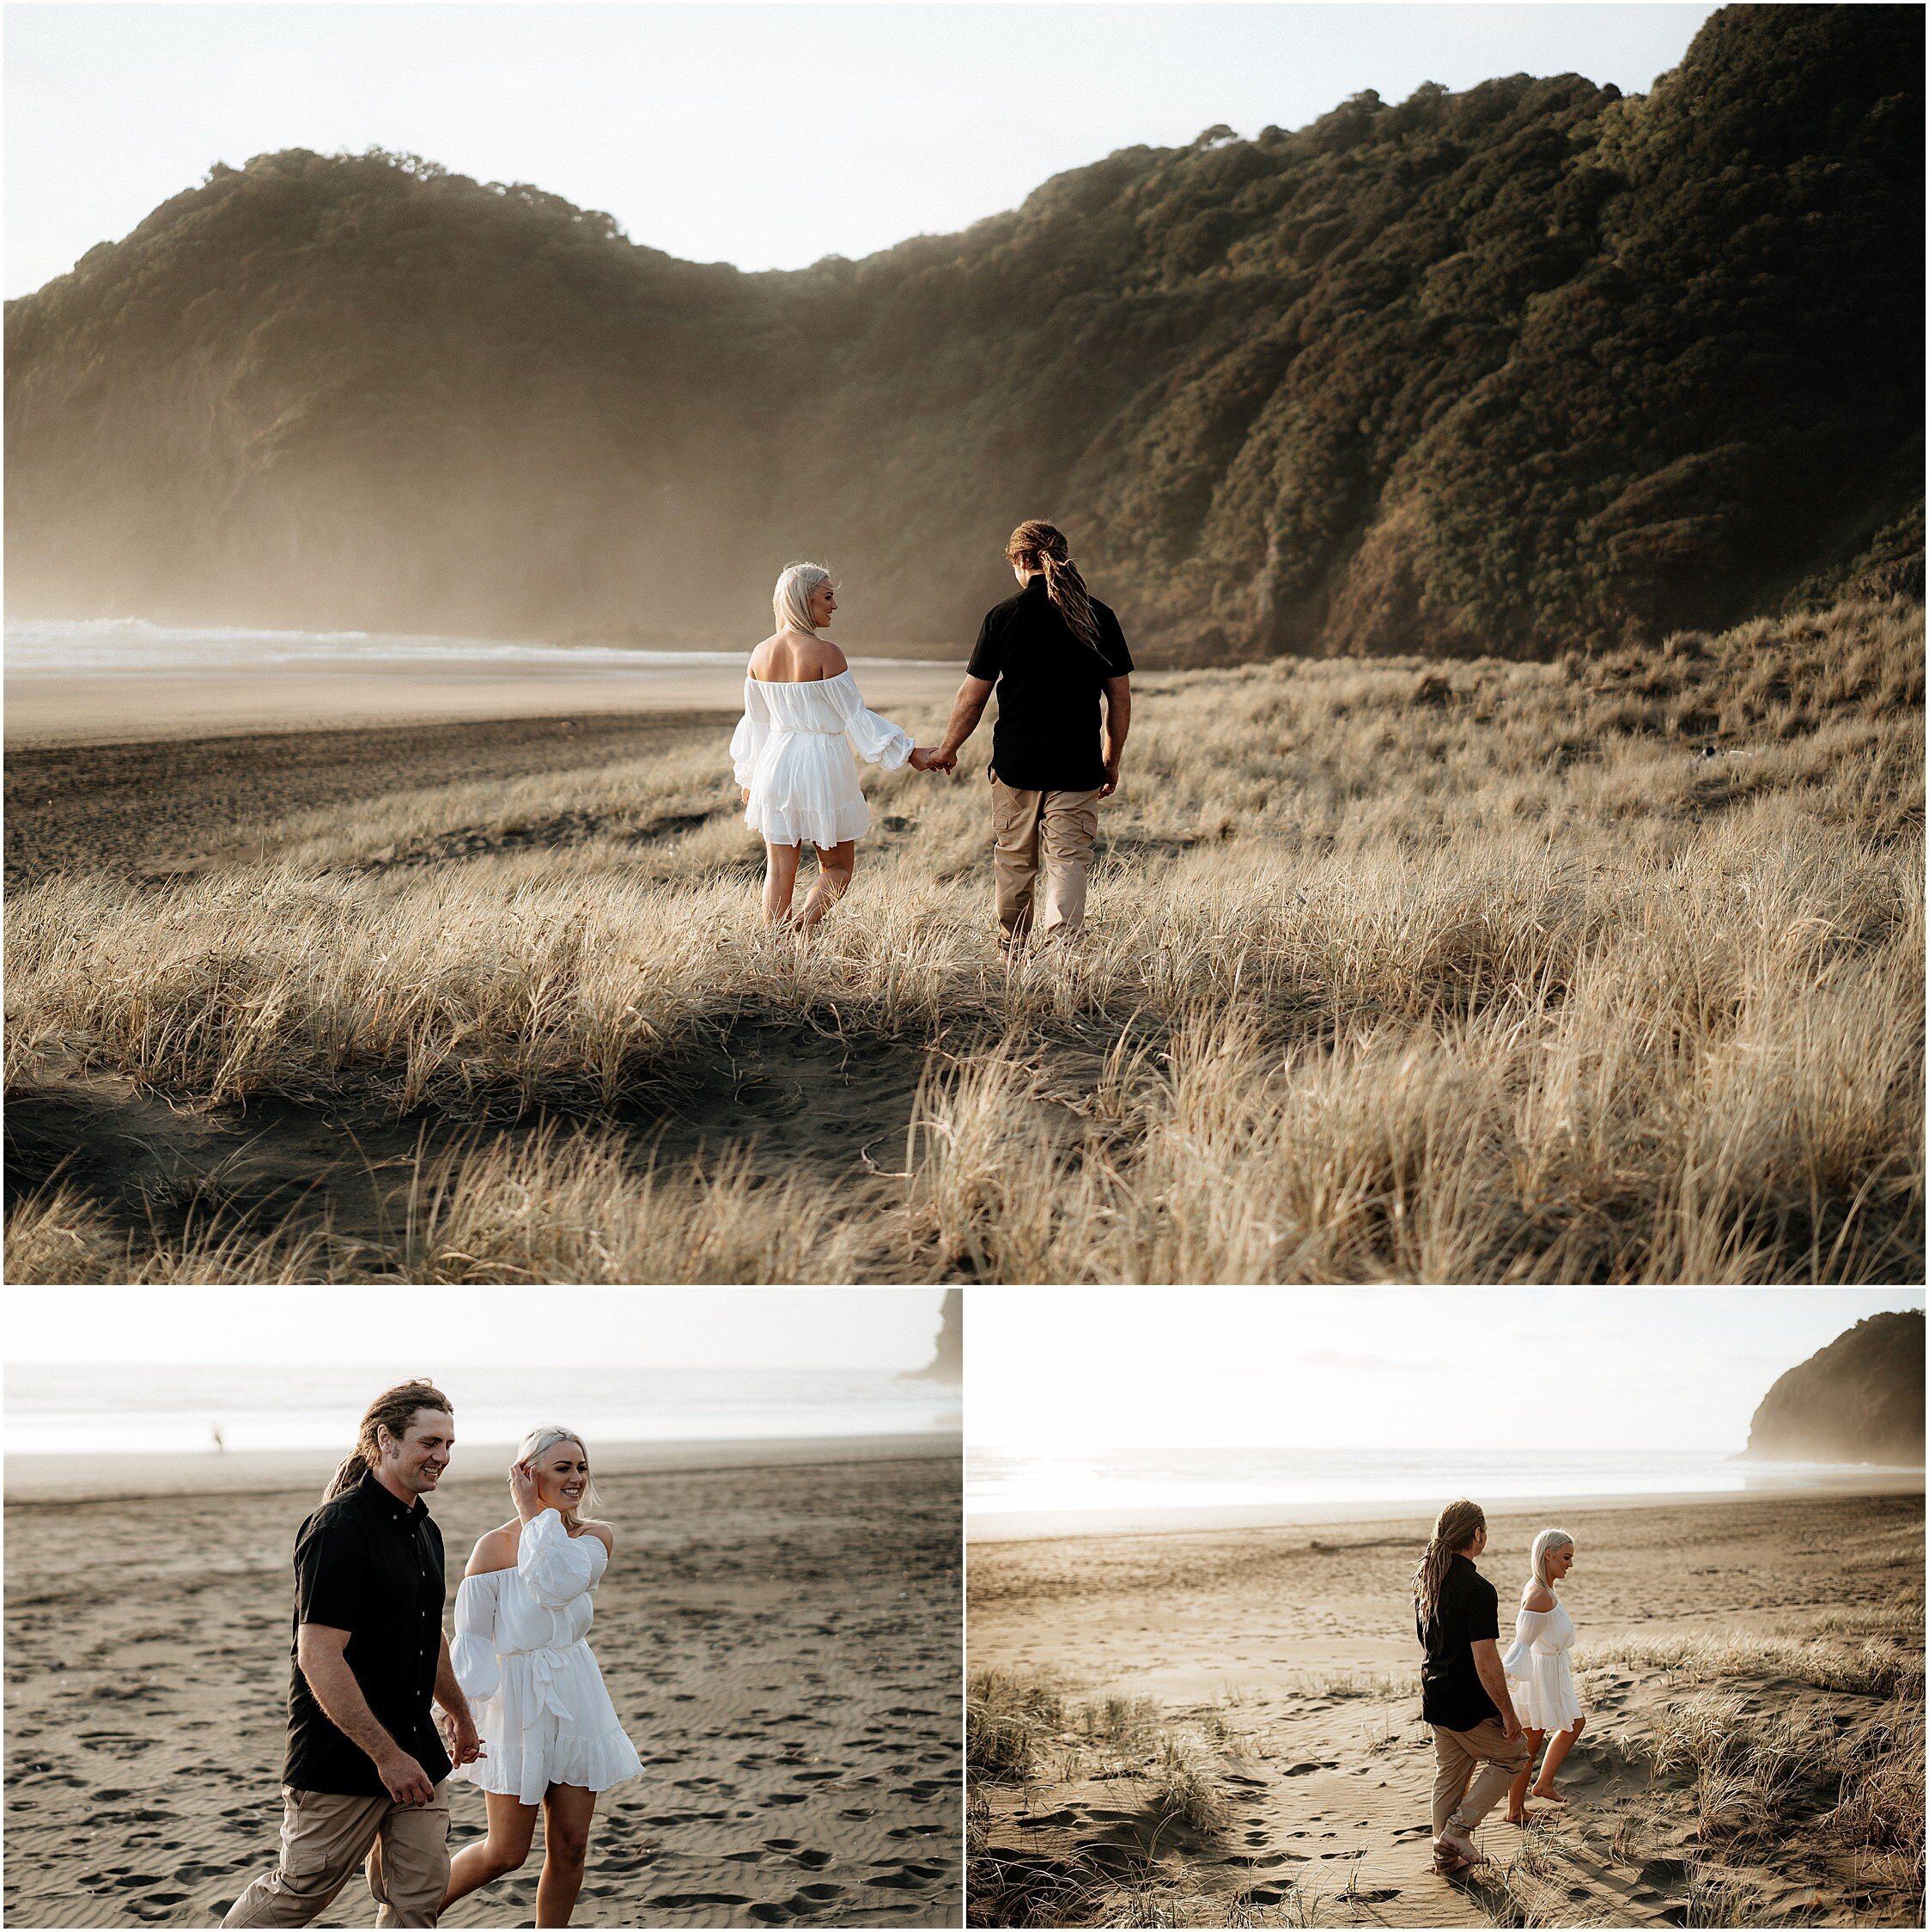 Zanda+Auckland+wedding+photographer+black+sand+moody+romantic+sunset+Piha+beach+engagement+New+Zealand_2.jpeg